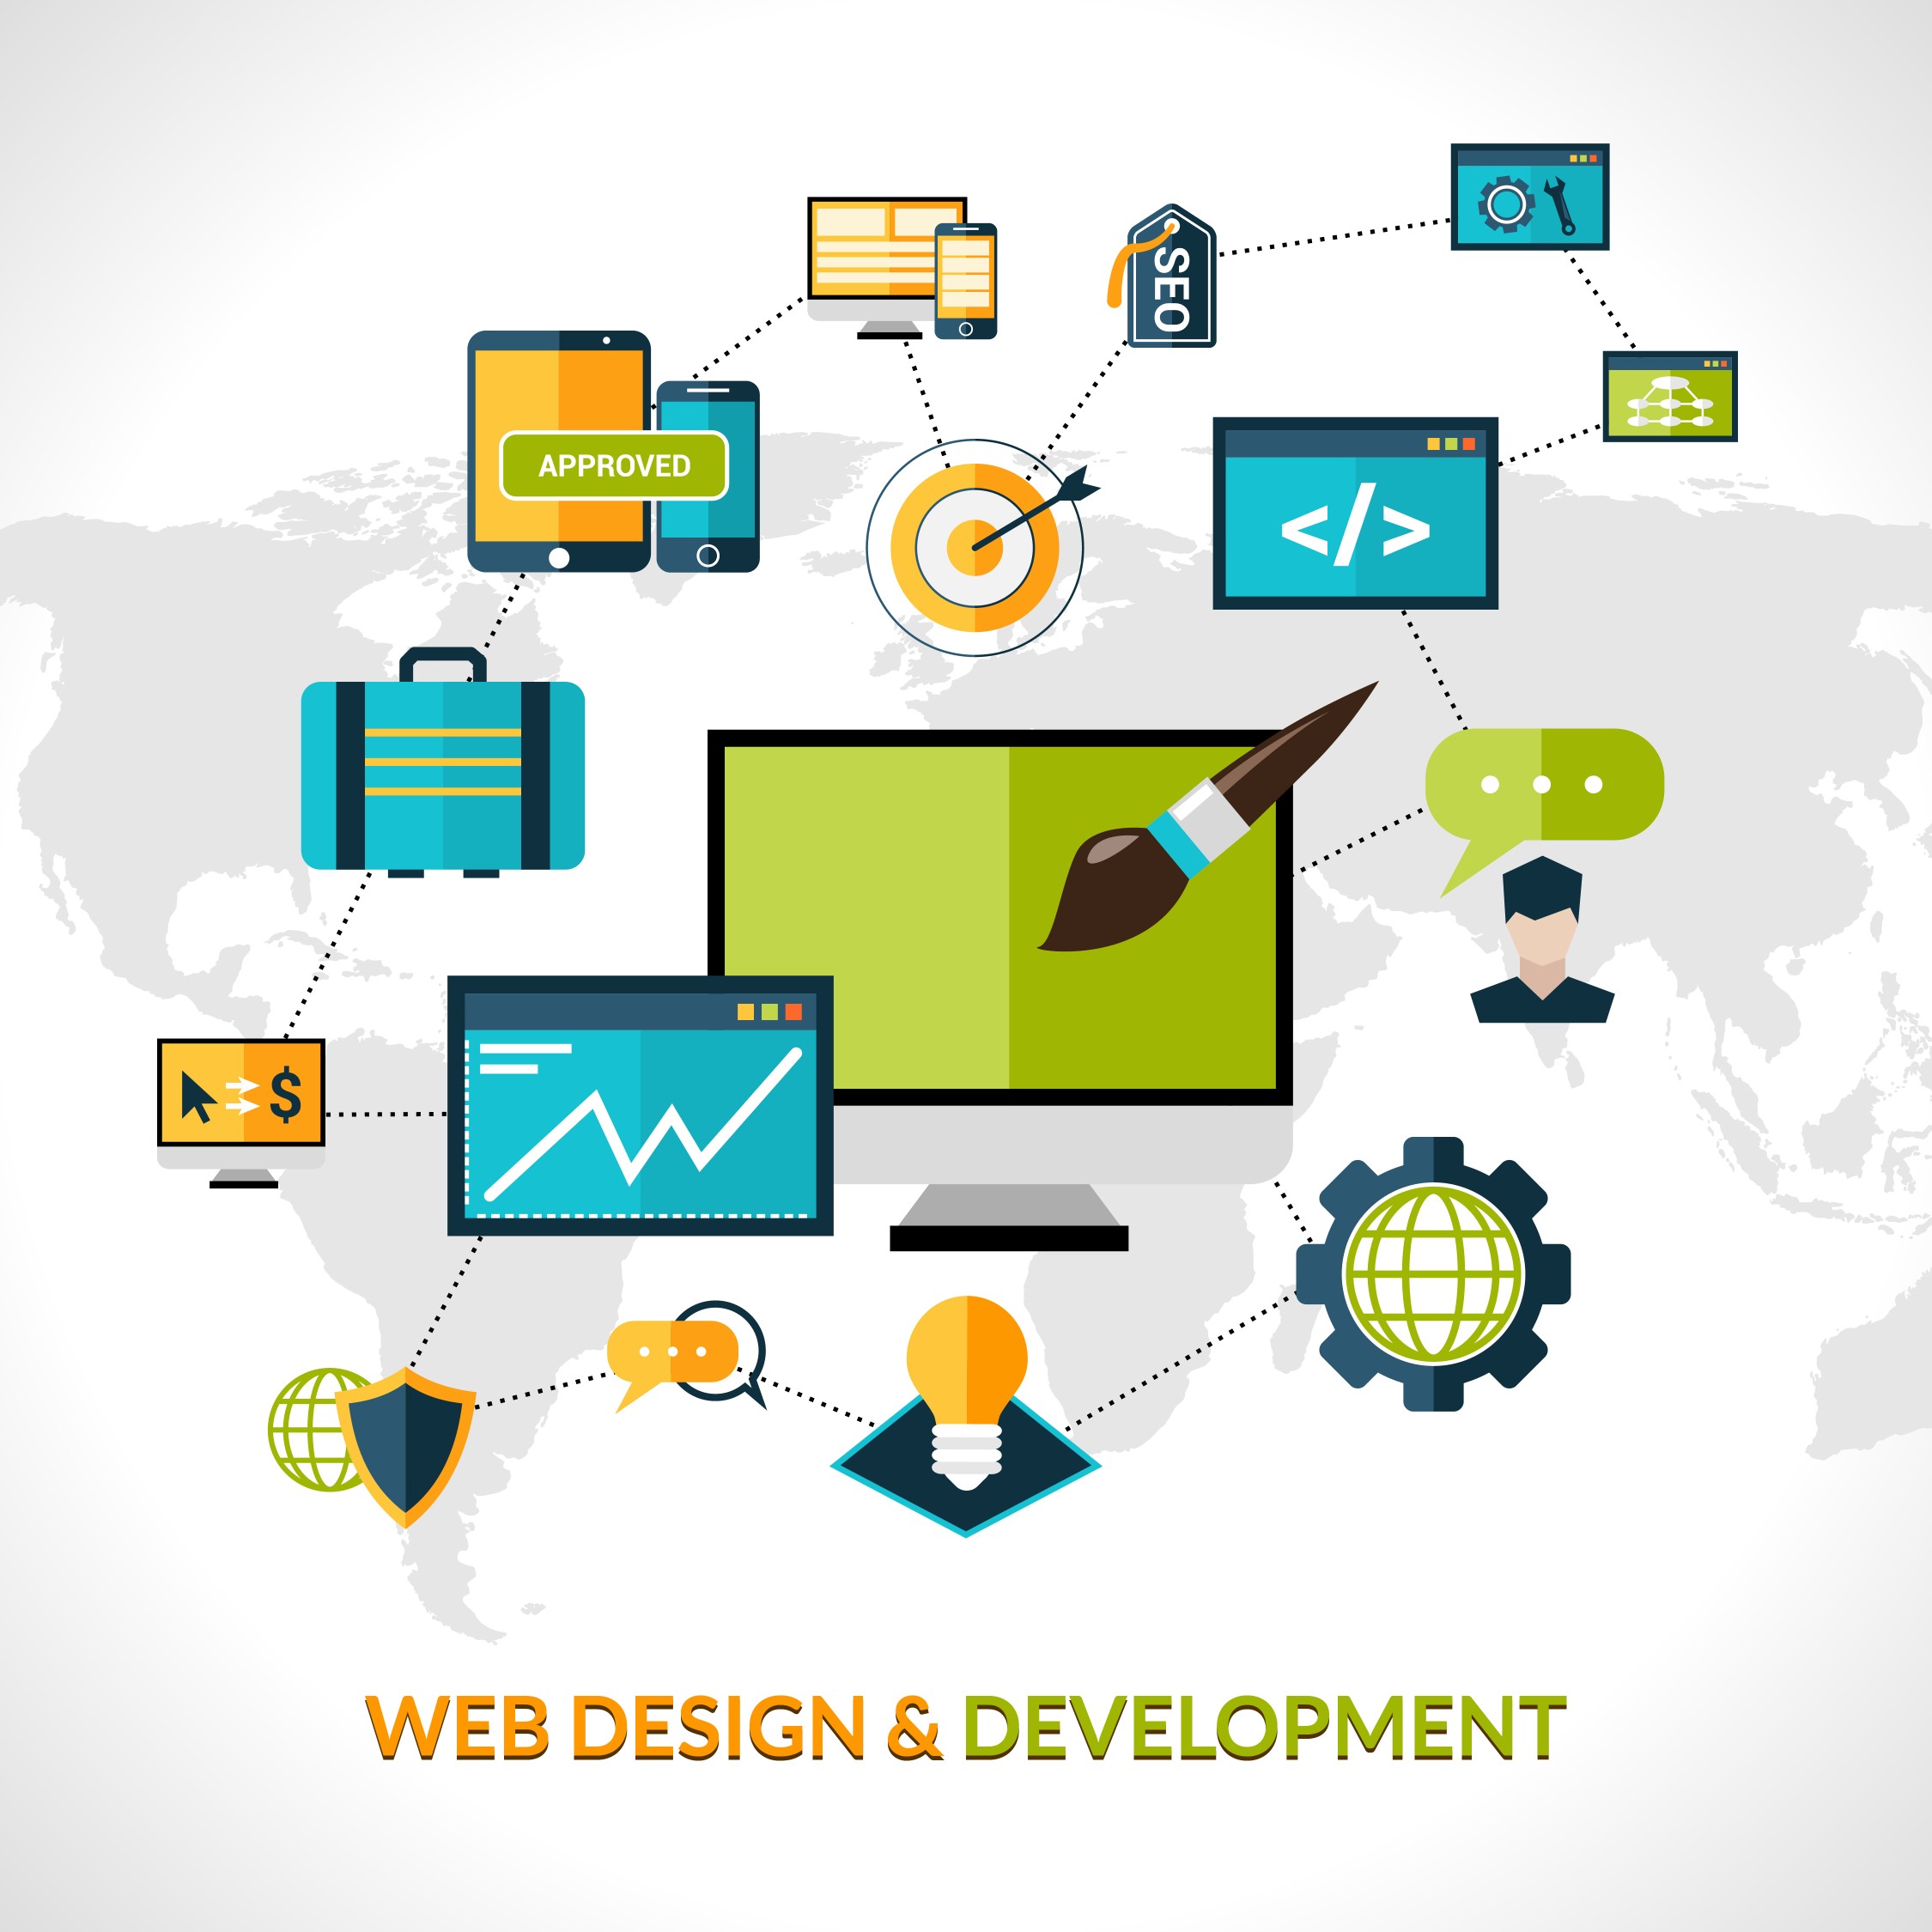 web development and design